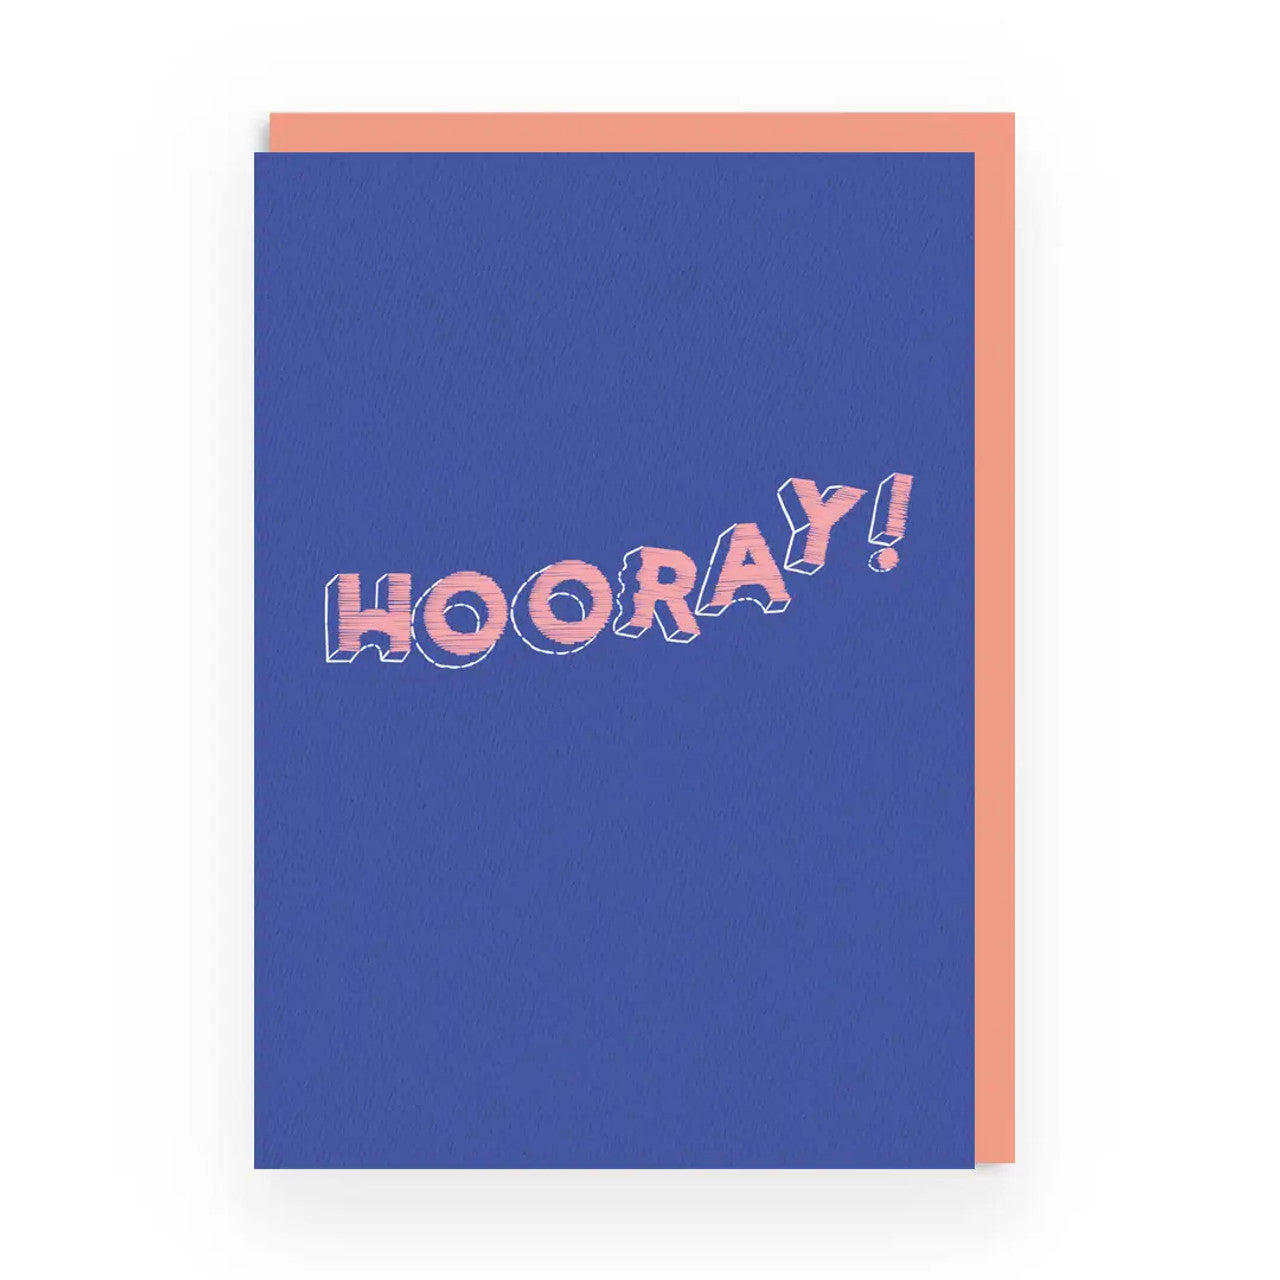 Celebration Card text reads "Hooray"